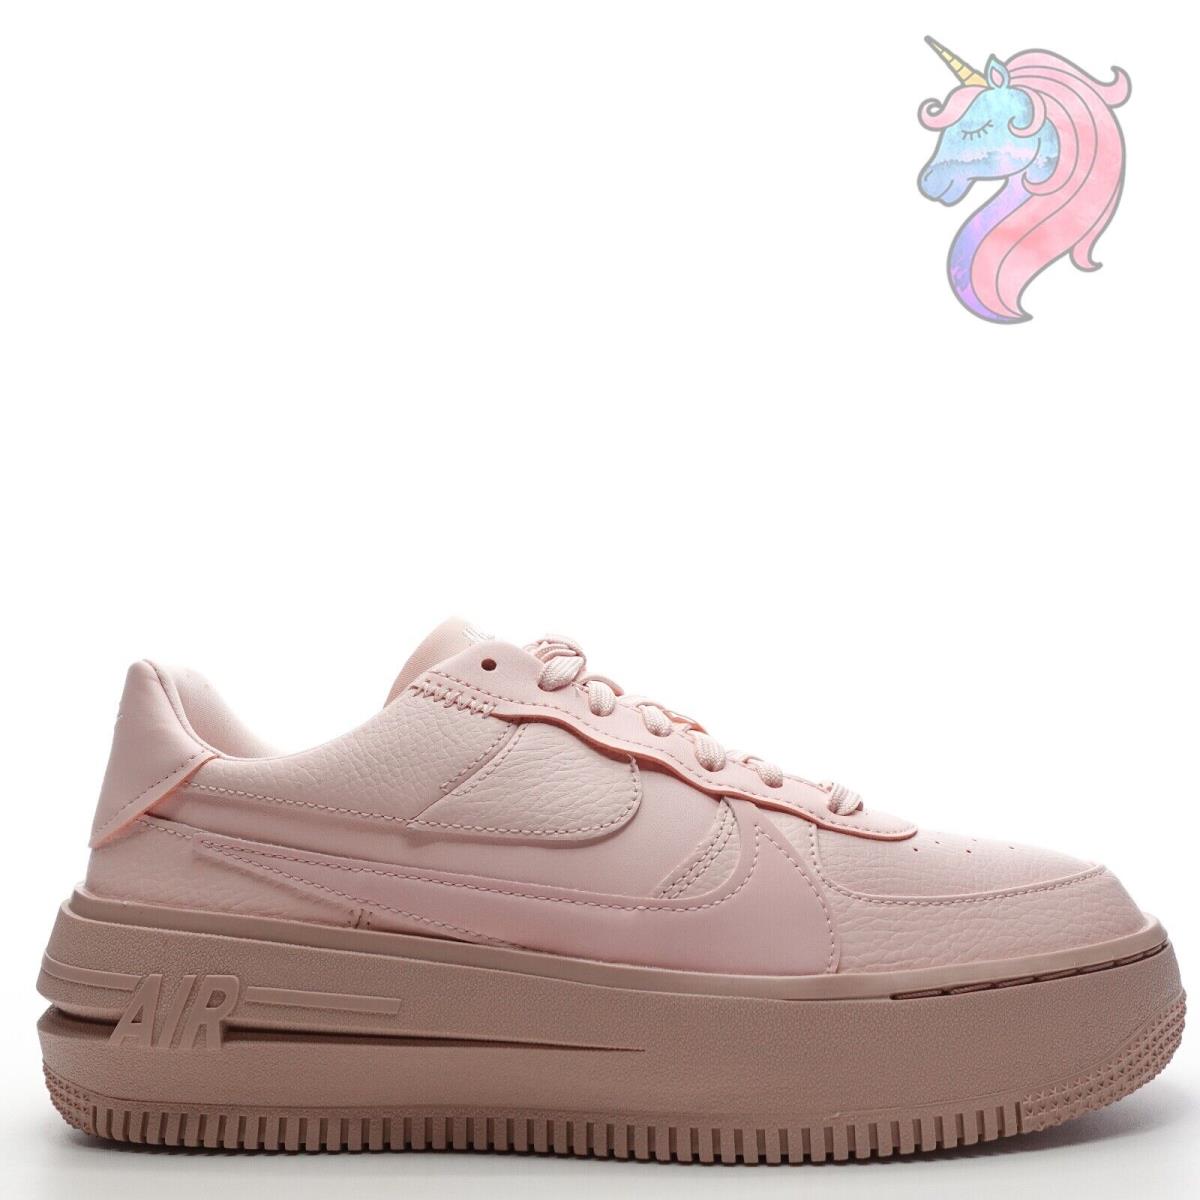 Womens Nike Air Force 1 Size 10.5 Platform Shoes Pink Oxford DJ9946-600